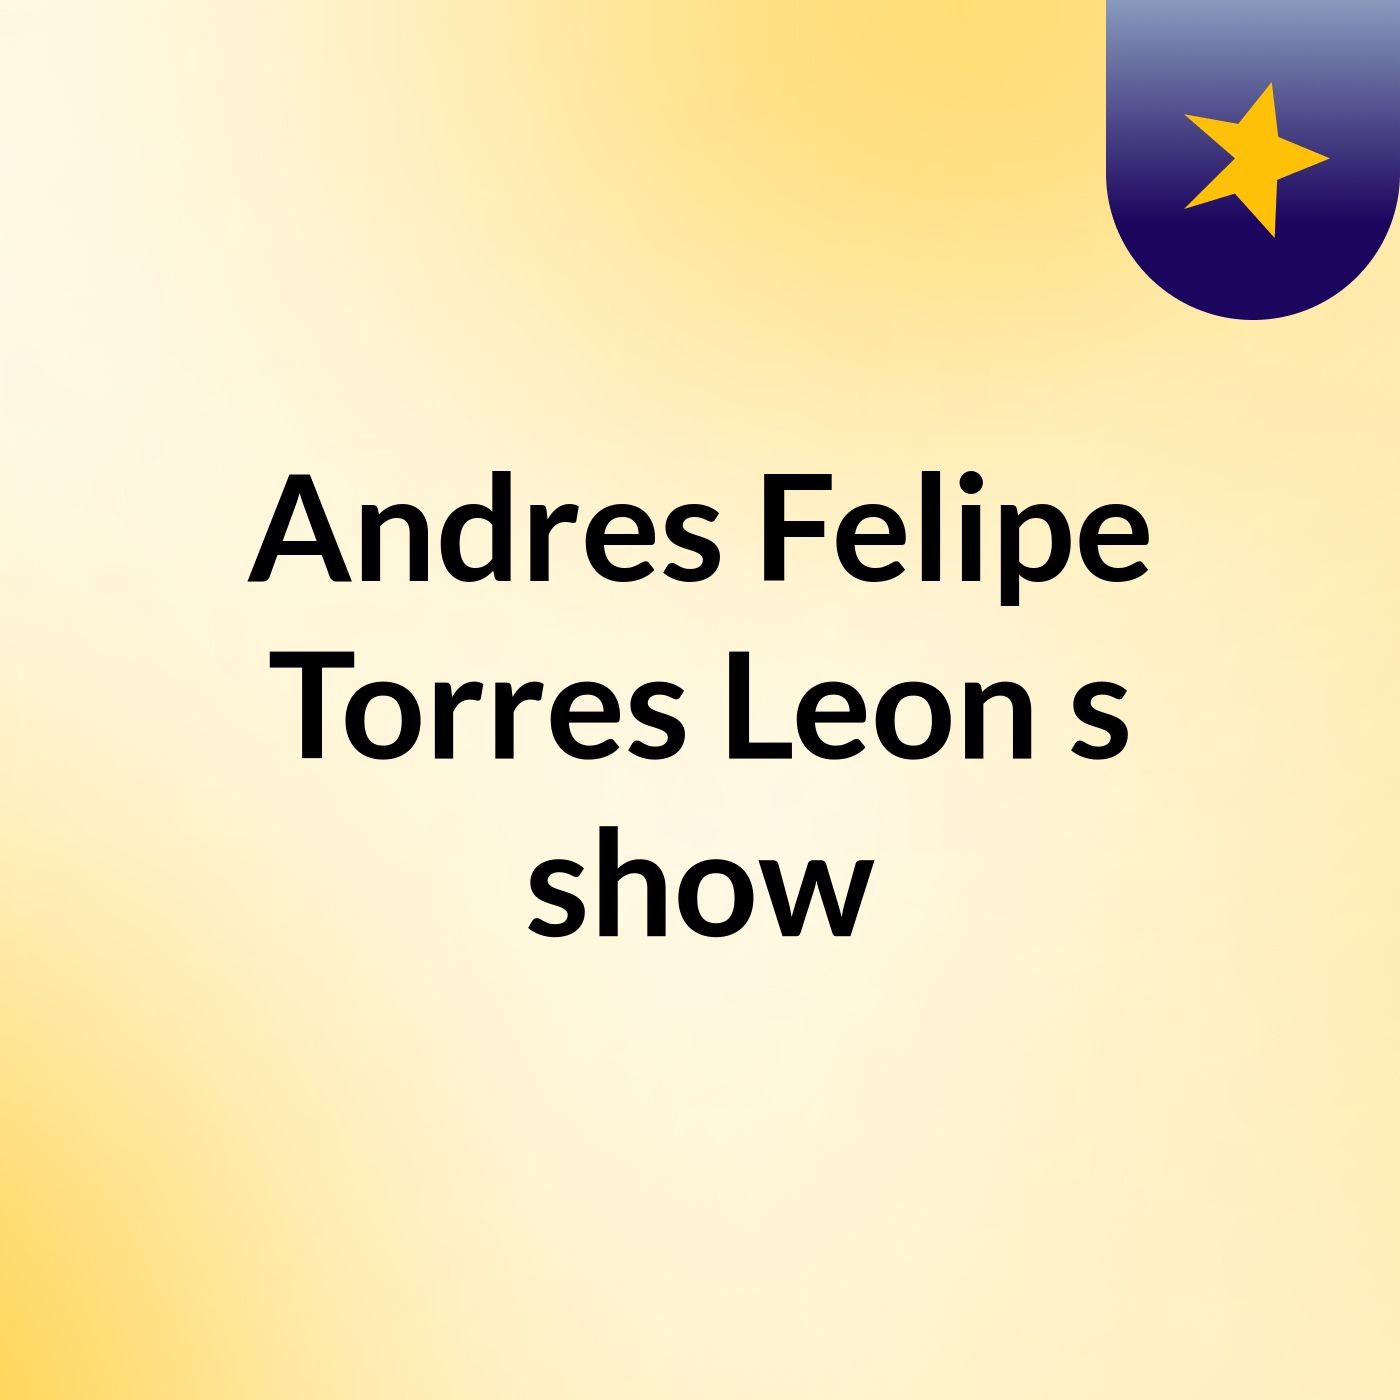 Andres Felipe Torres Leon's show